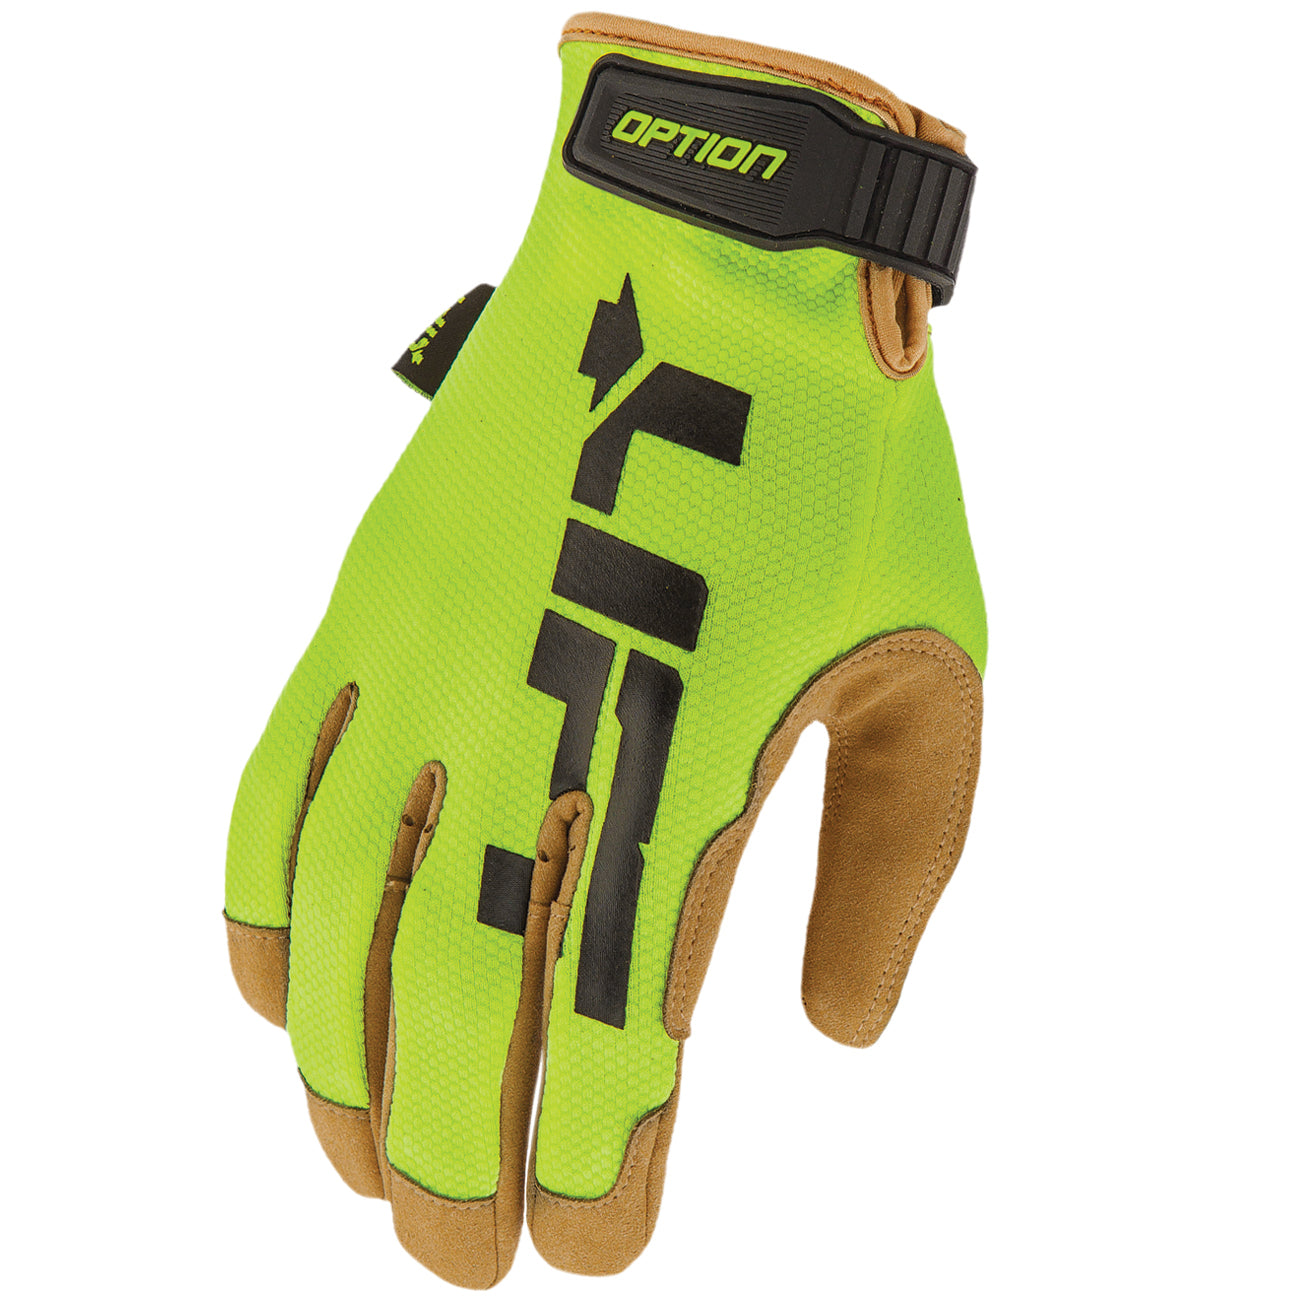 LIFT Safety - OPTION Winter Glove (Hi-Viz) with Thinsulate